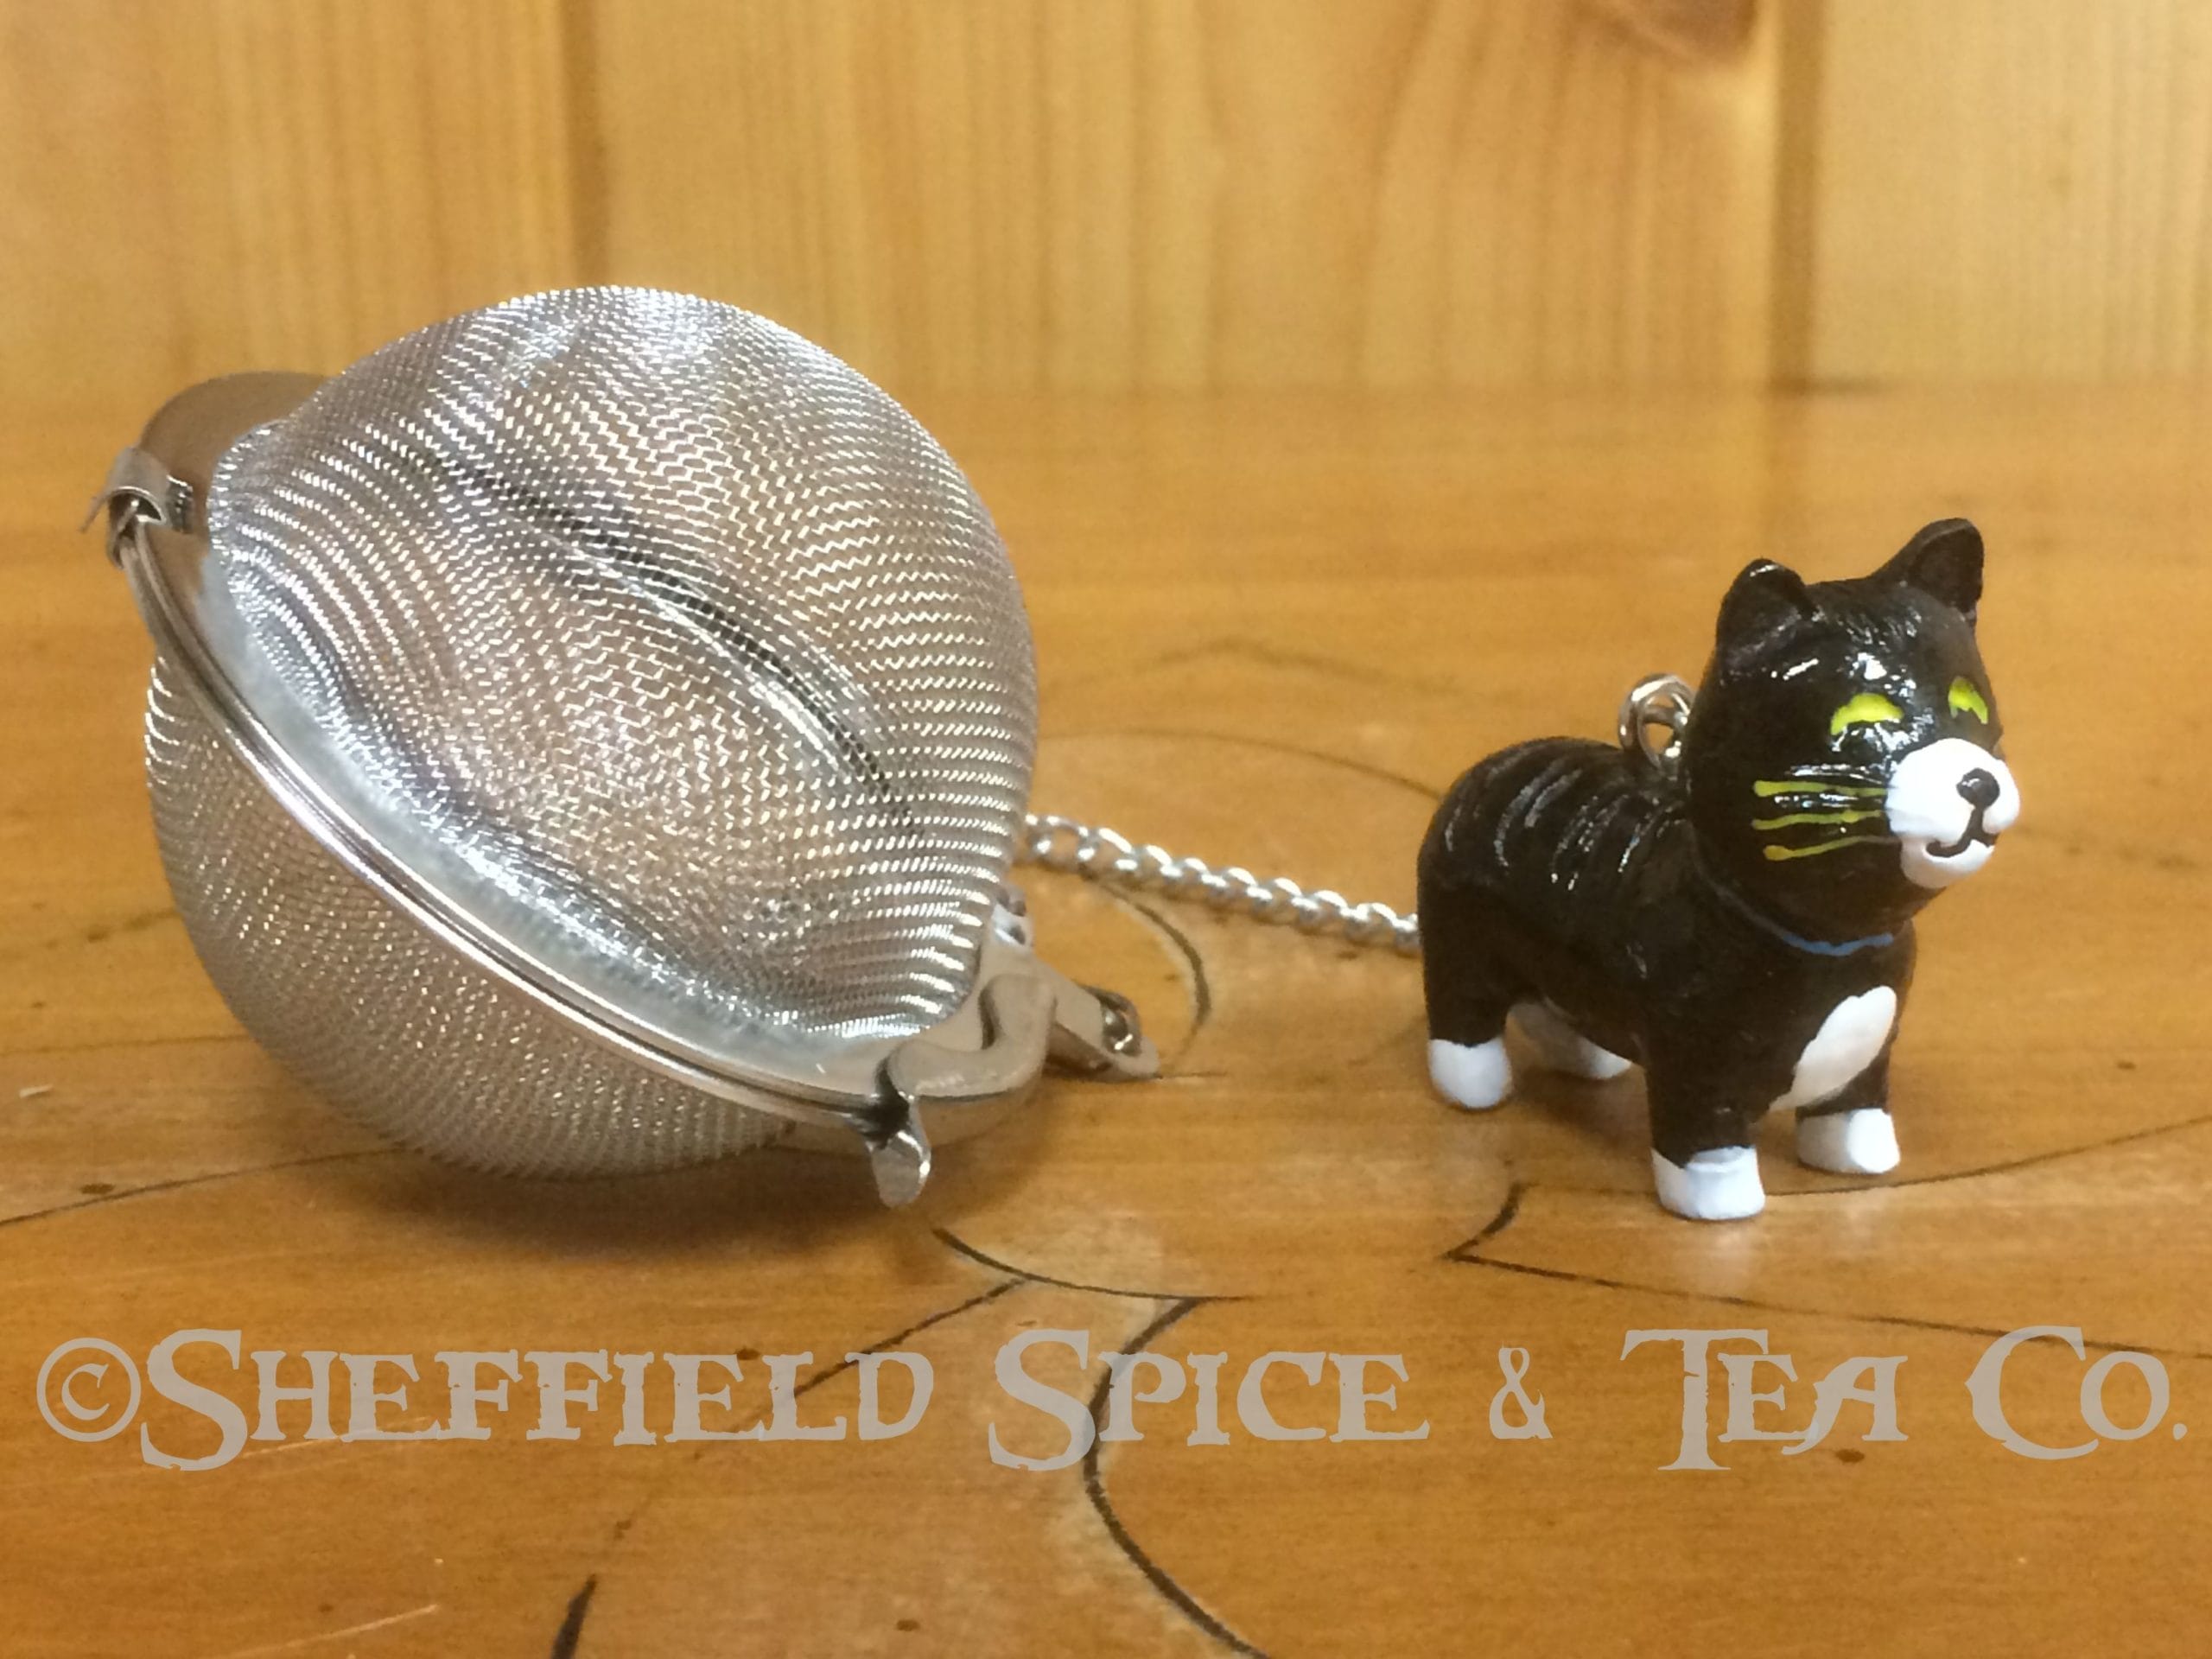 Chicago Steel Insulated Tea Infuser Bottles - Sheffield Spice & Tea Co